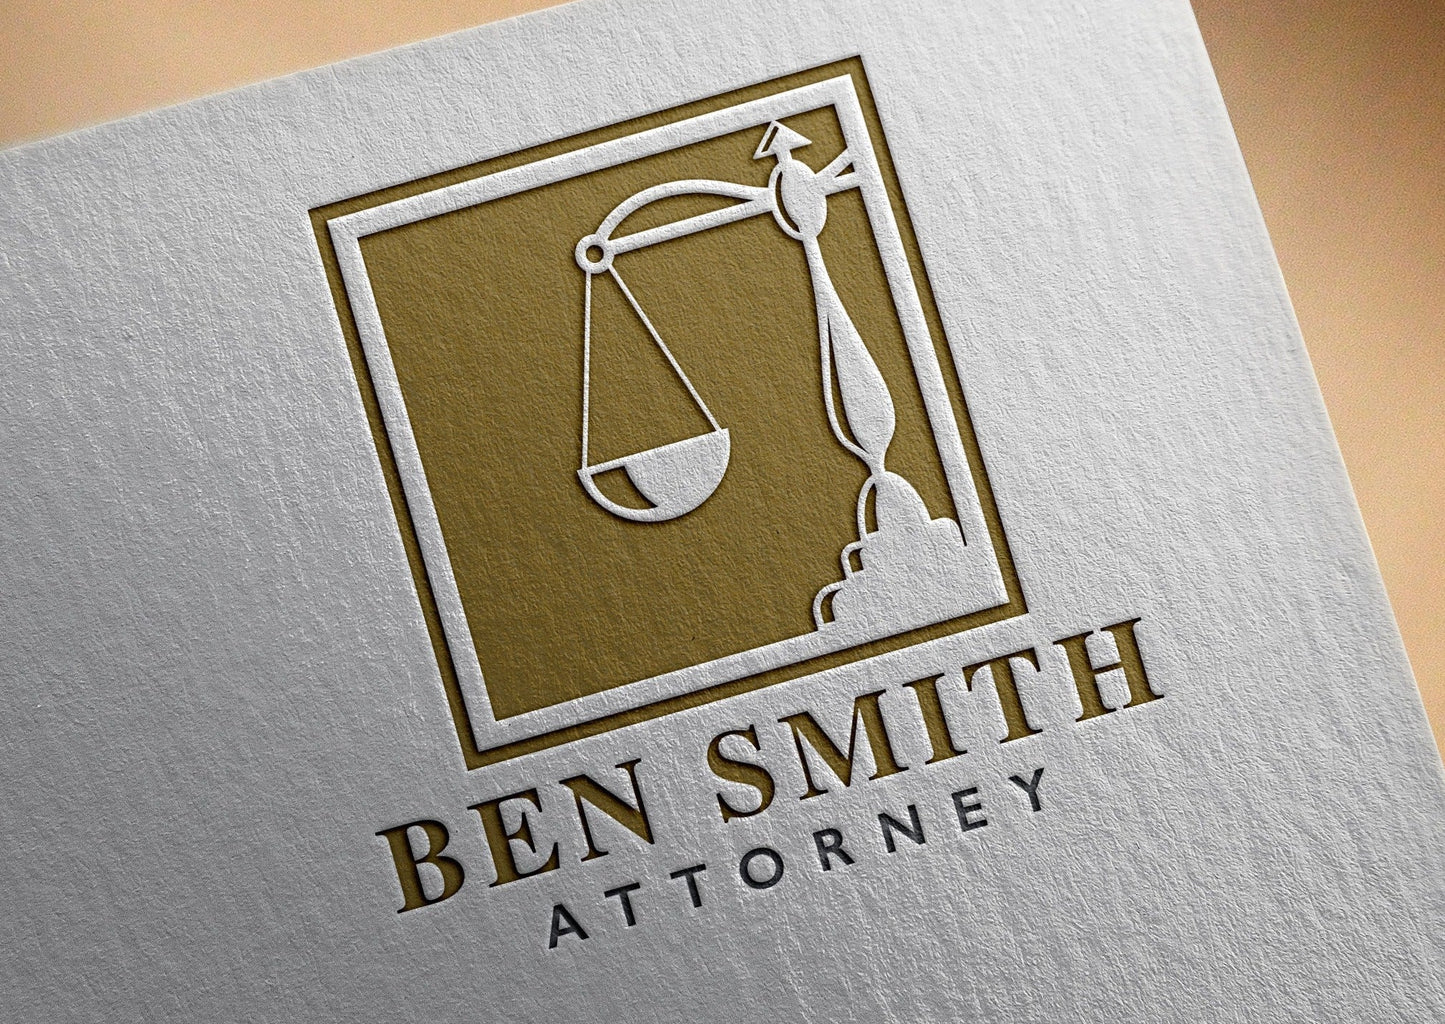 Logo Design lawyer law office attorney at law branding design